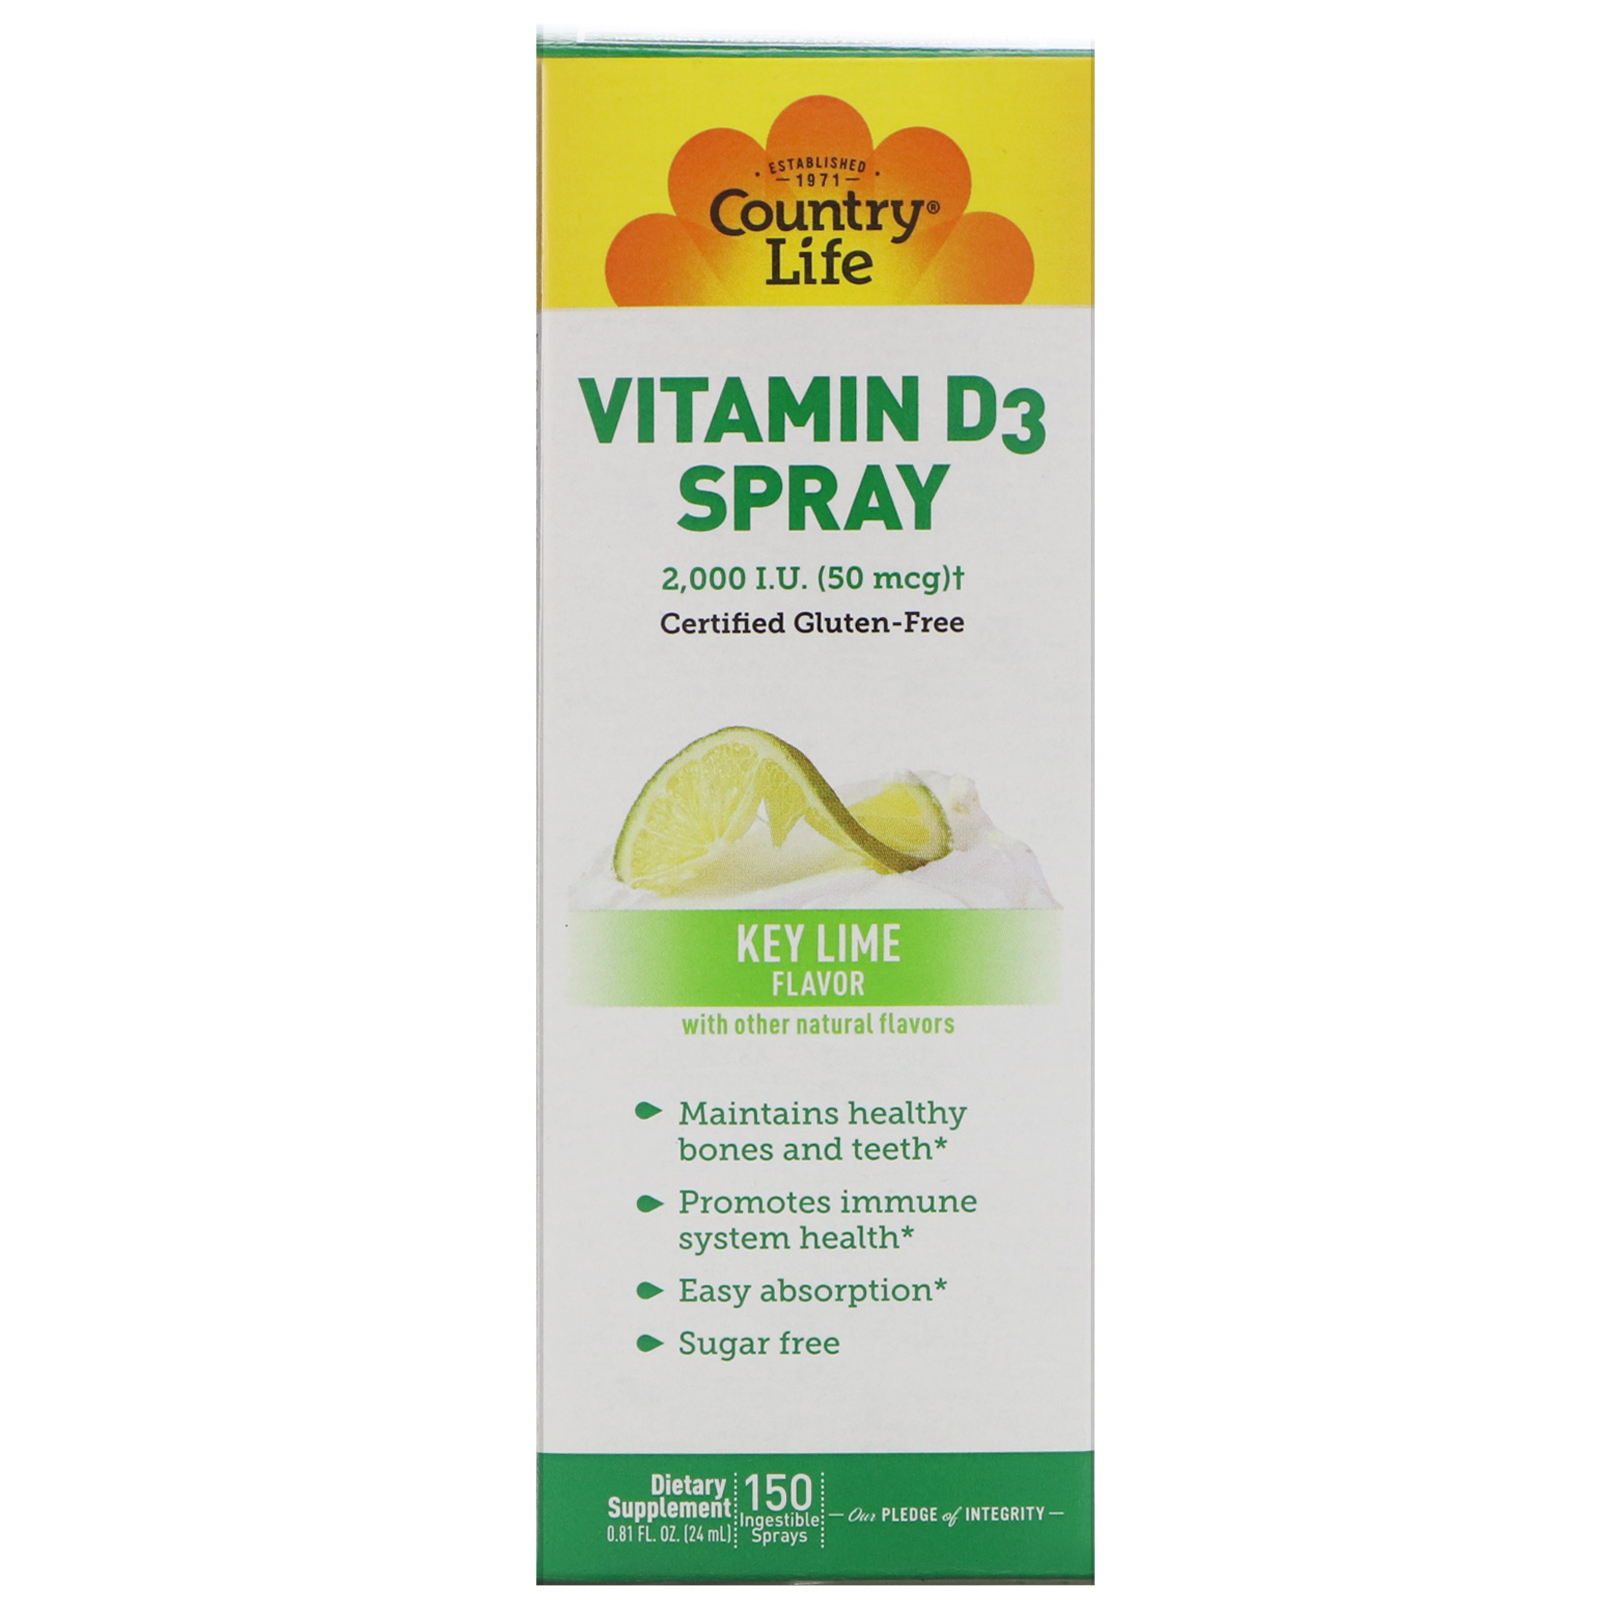 Country Life Vitamin D3 Spray Key Lime Flavor 2000 Iu